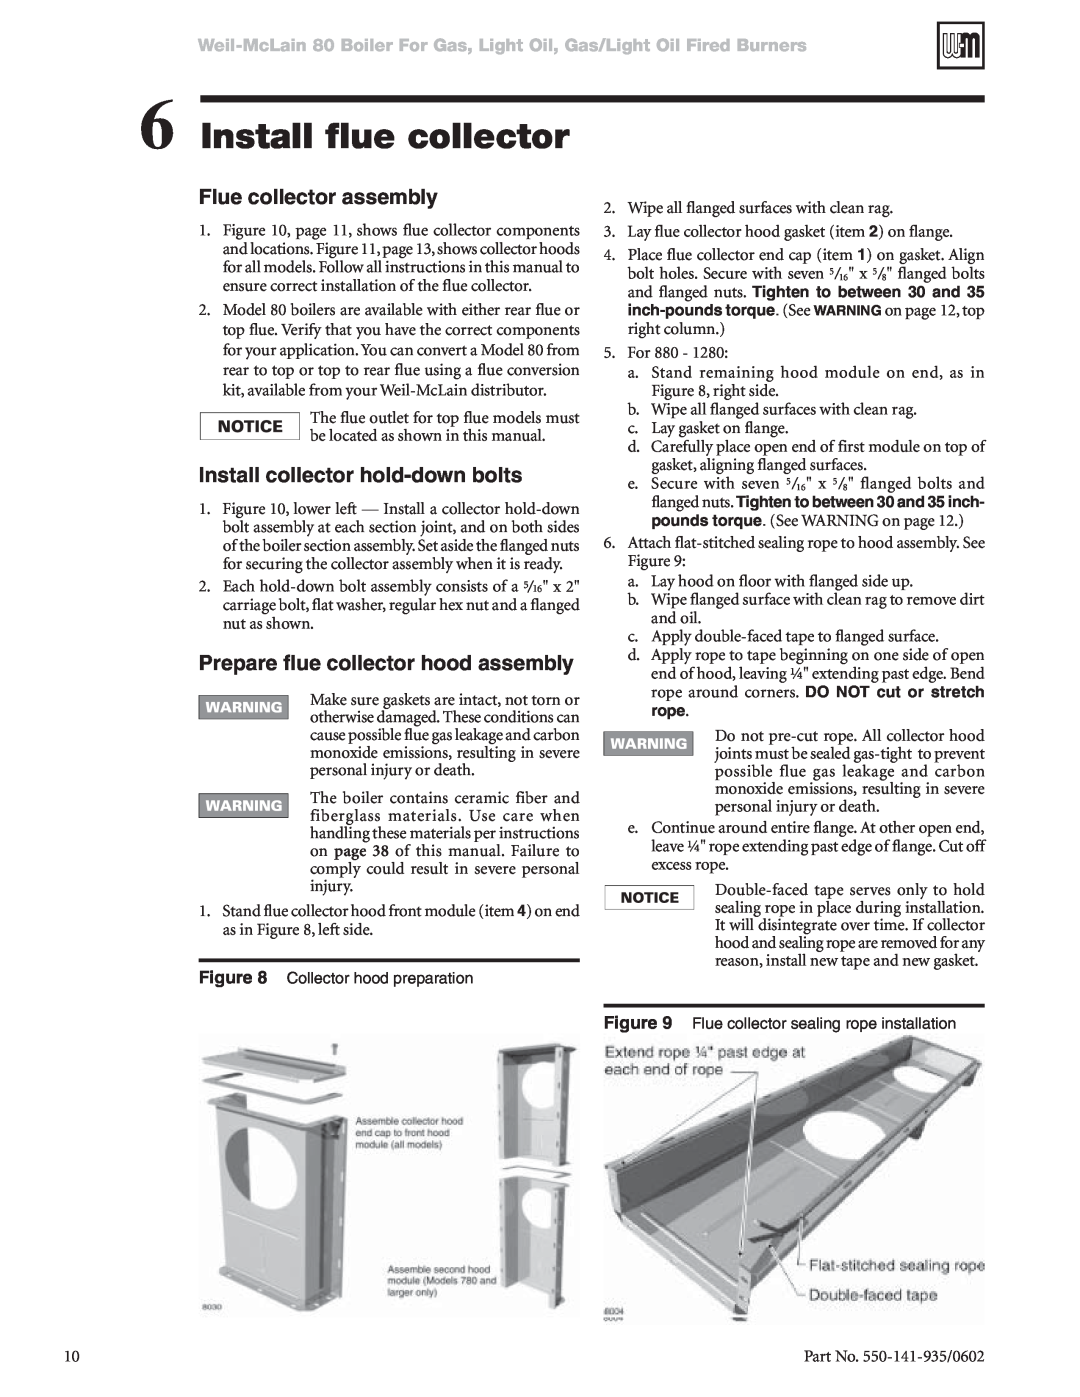 Weil-McLain 80 manual Install flue collector, Flue collector assembly, Install collector hold-downbolts 